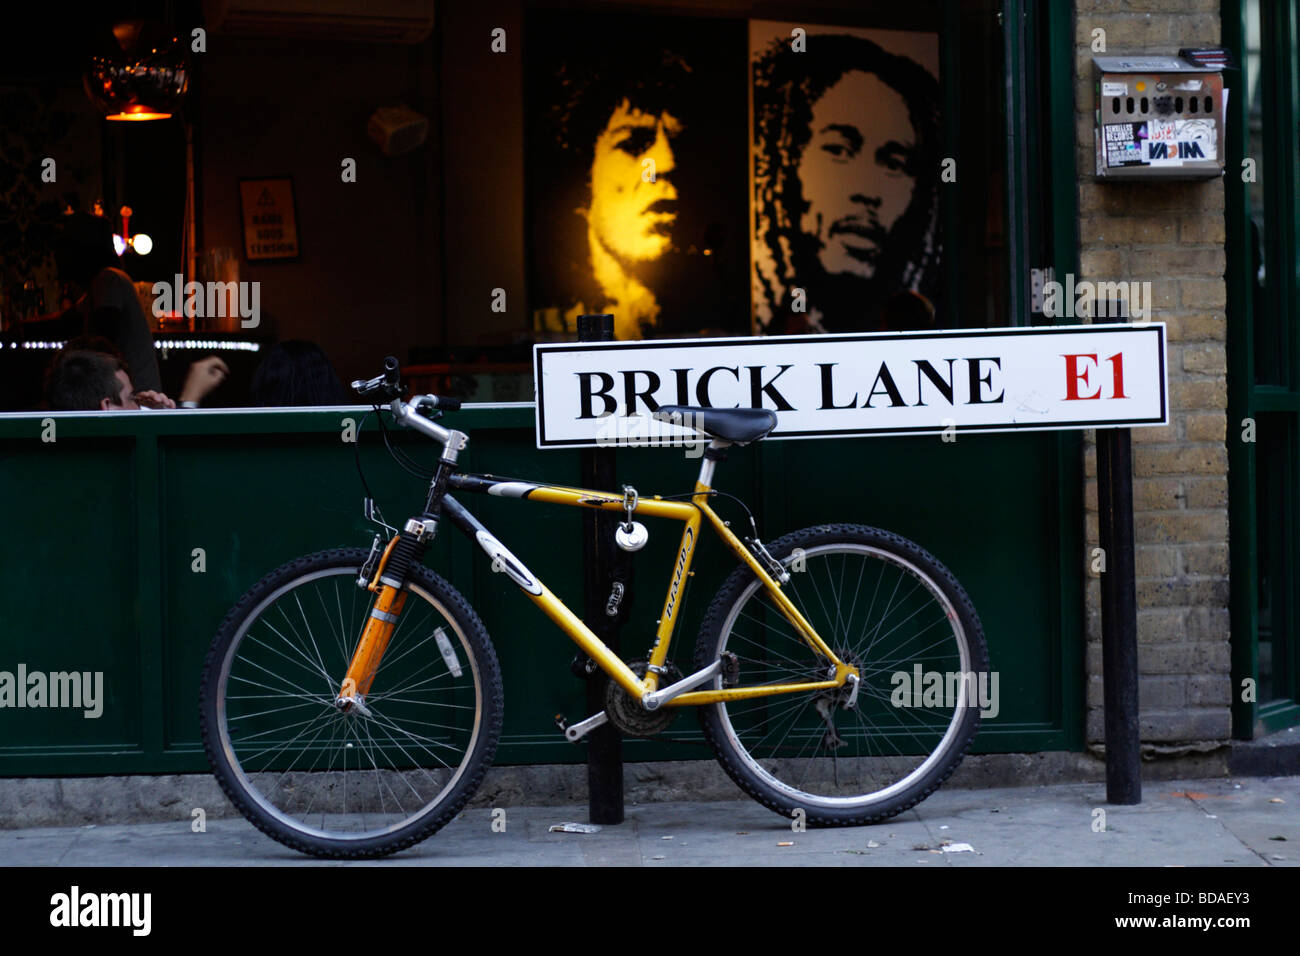 Brick lane street sign an a bicycle in Brick lane London Stock Photo